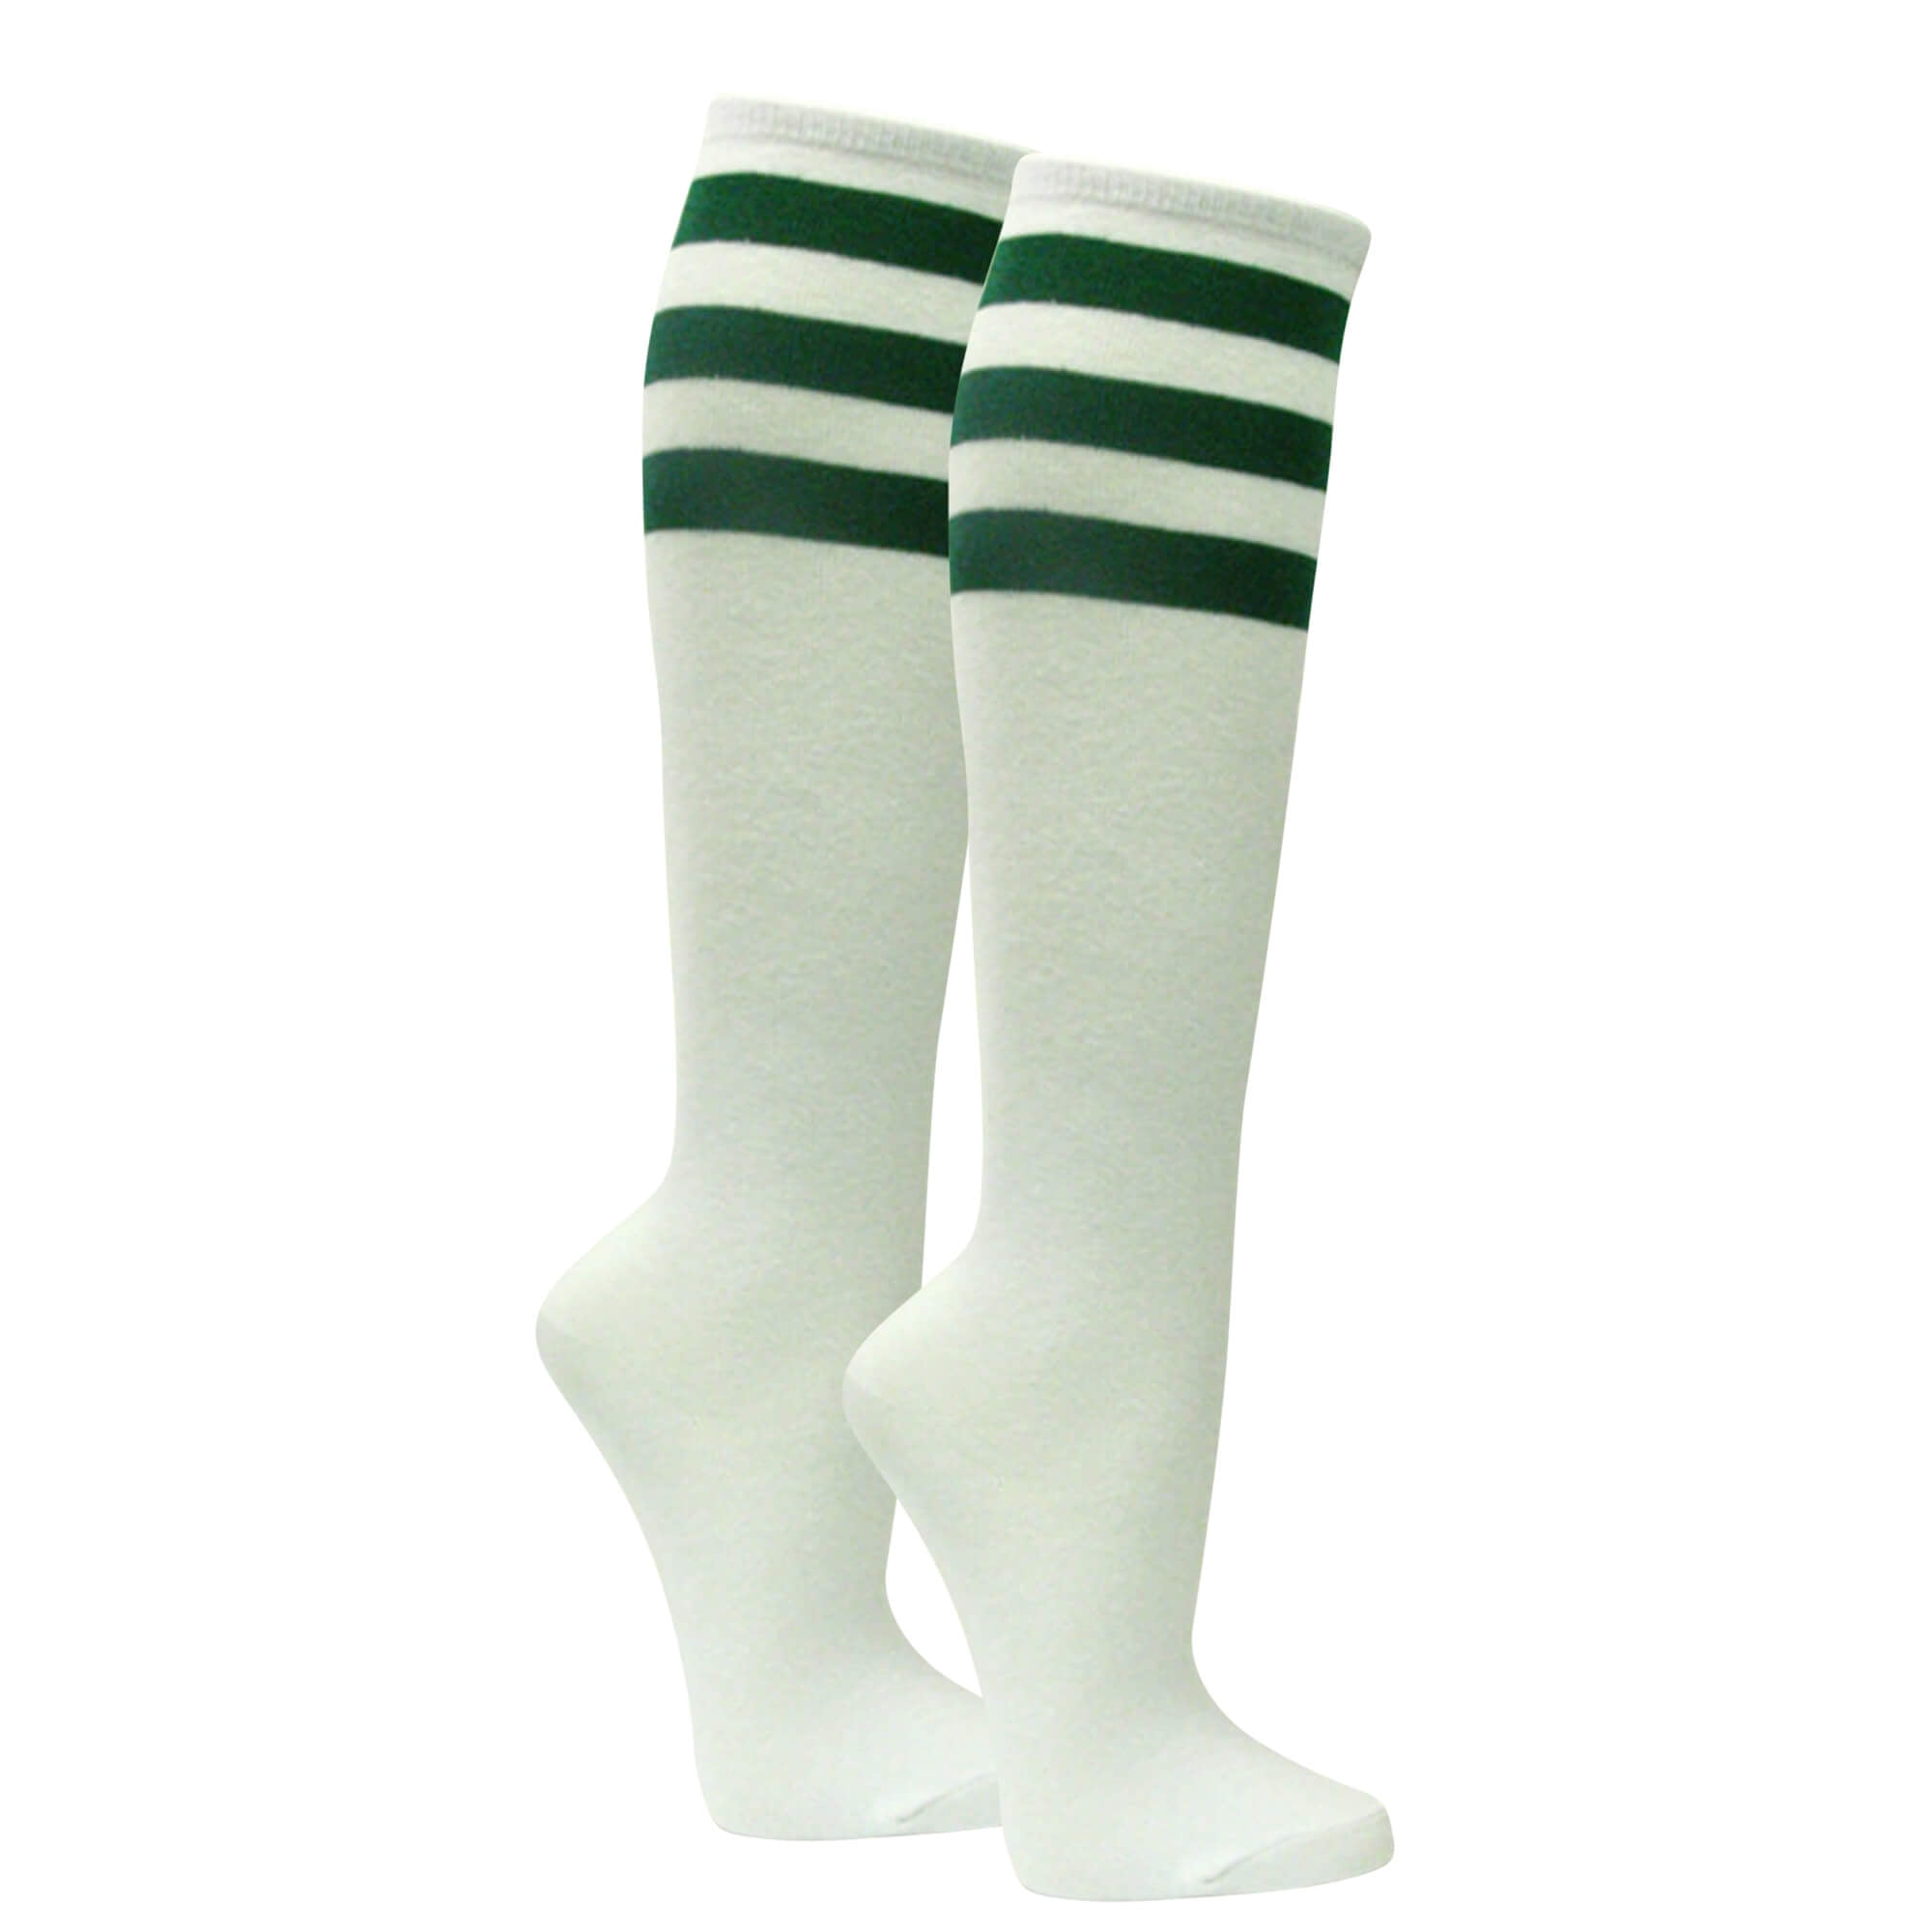 Knee Length Grey School Socks With Emerald & White Trim